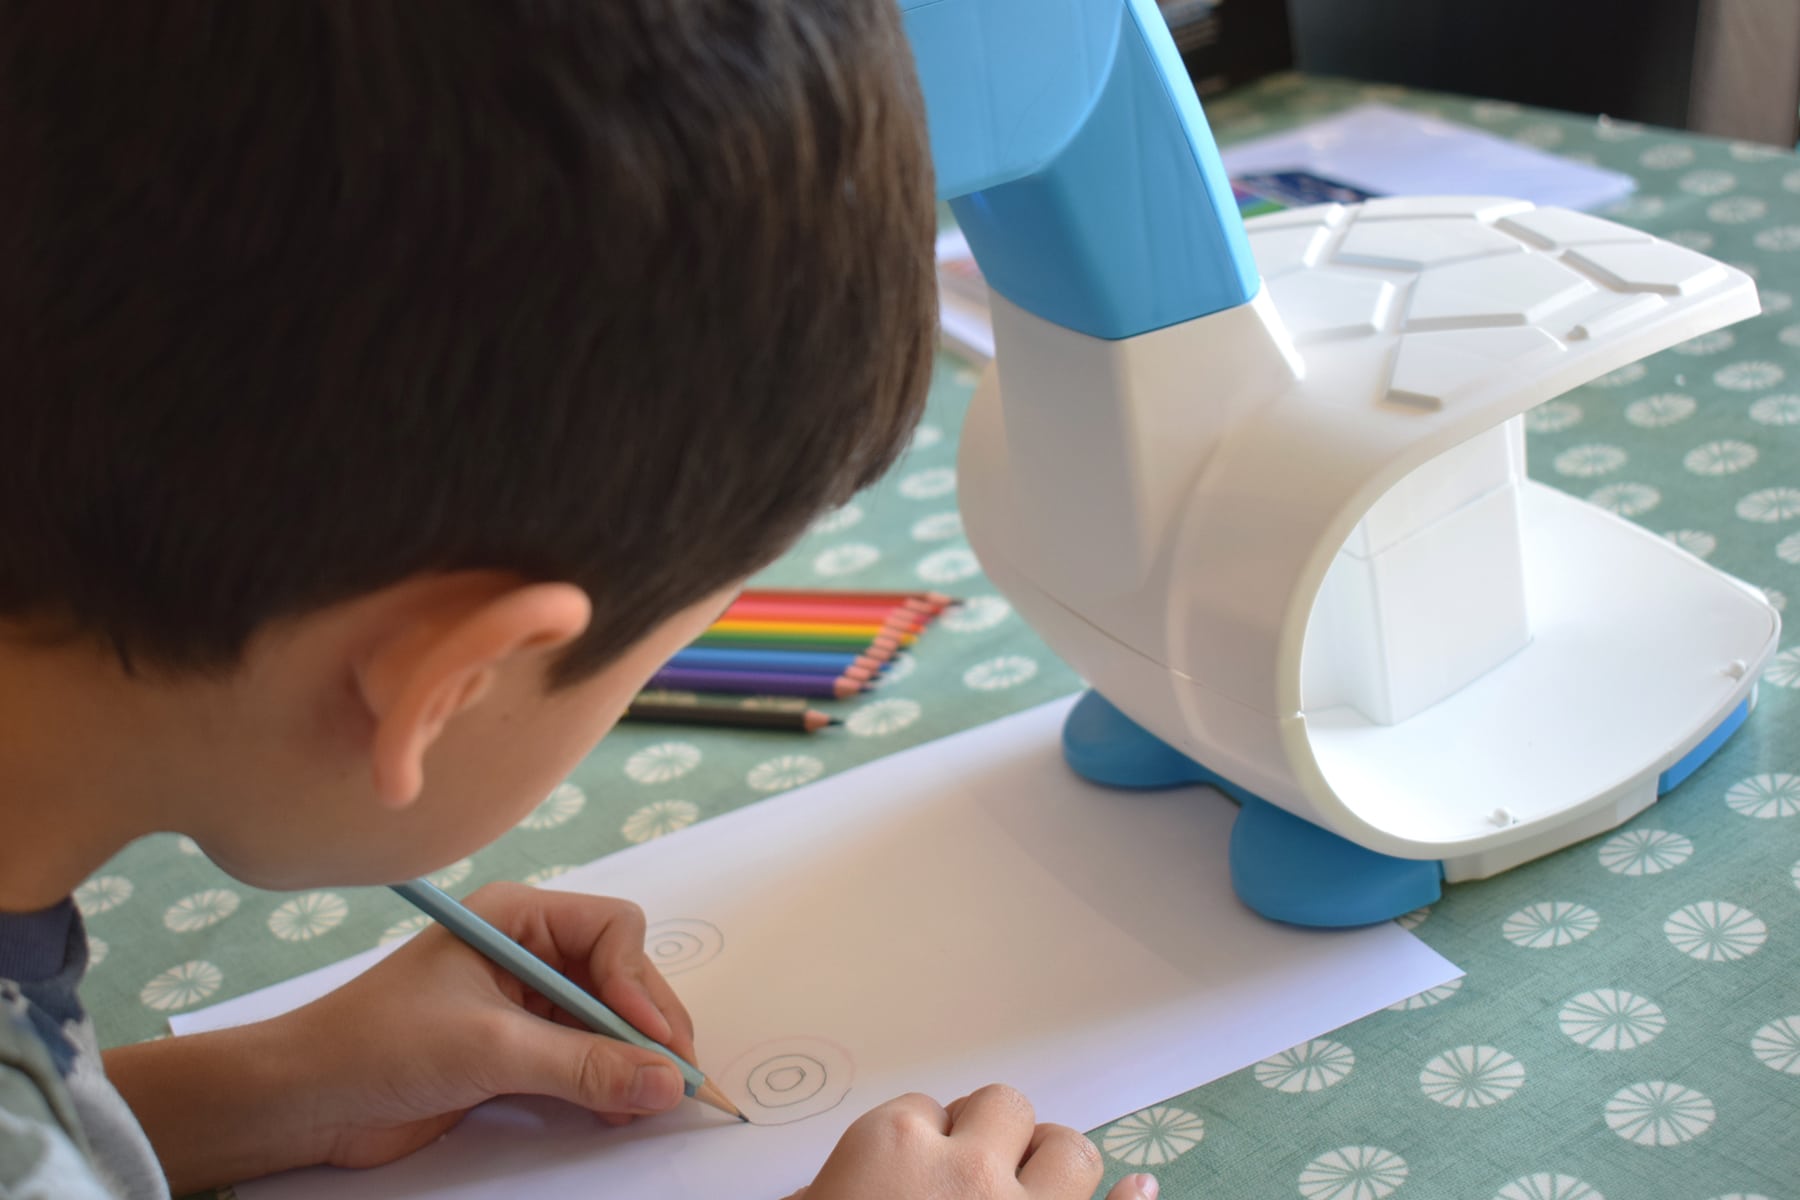 smART Sketcher Projector, Gift for Kids, Ages 5+